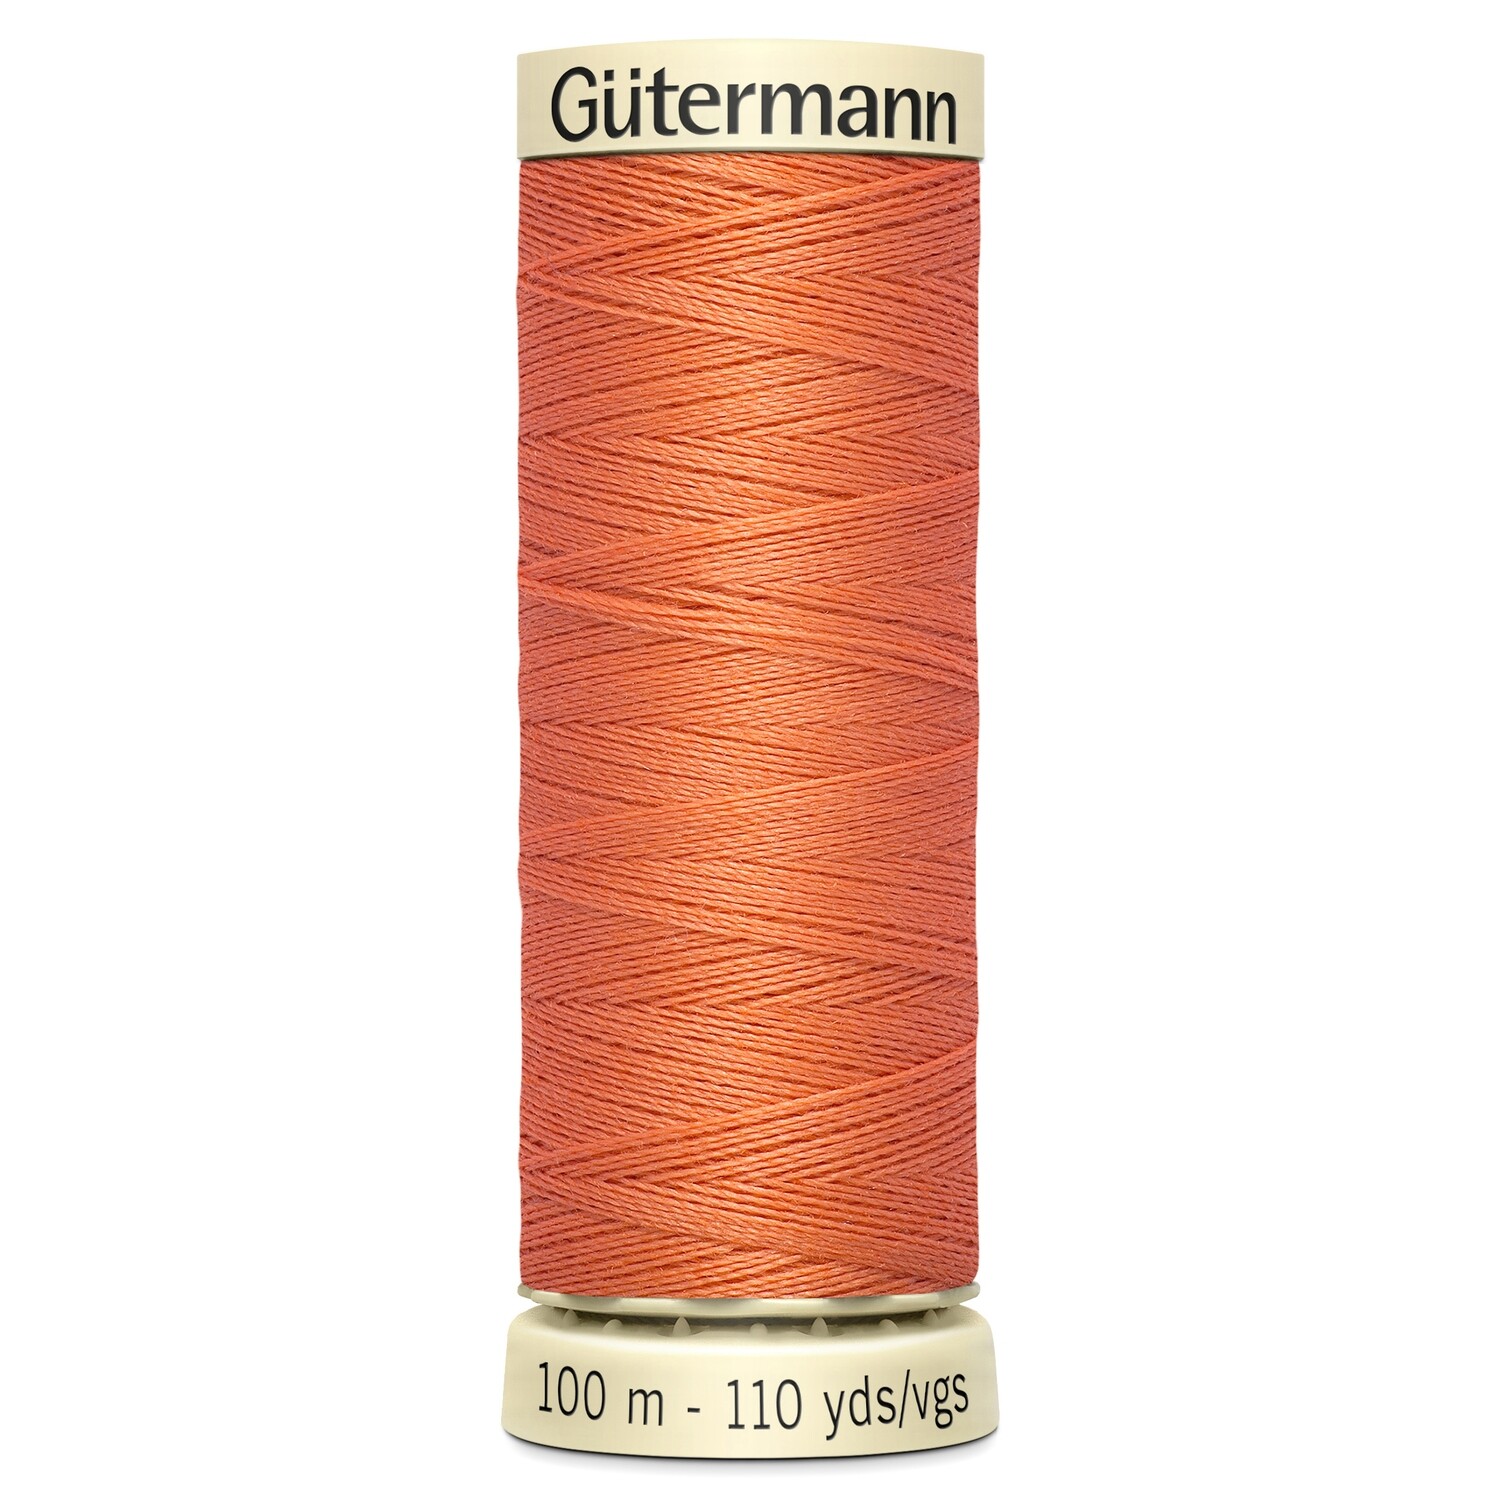 Gutermann Sew-All thread 895